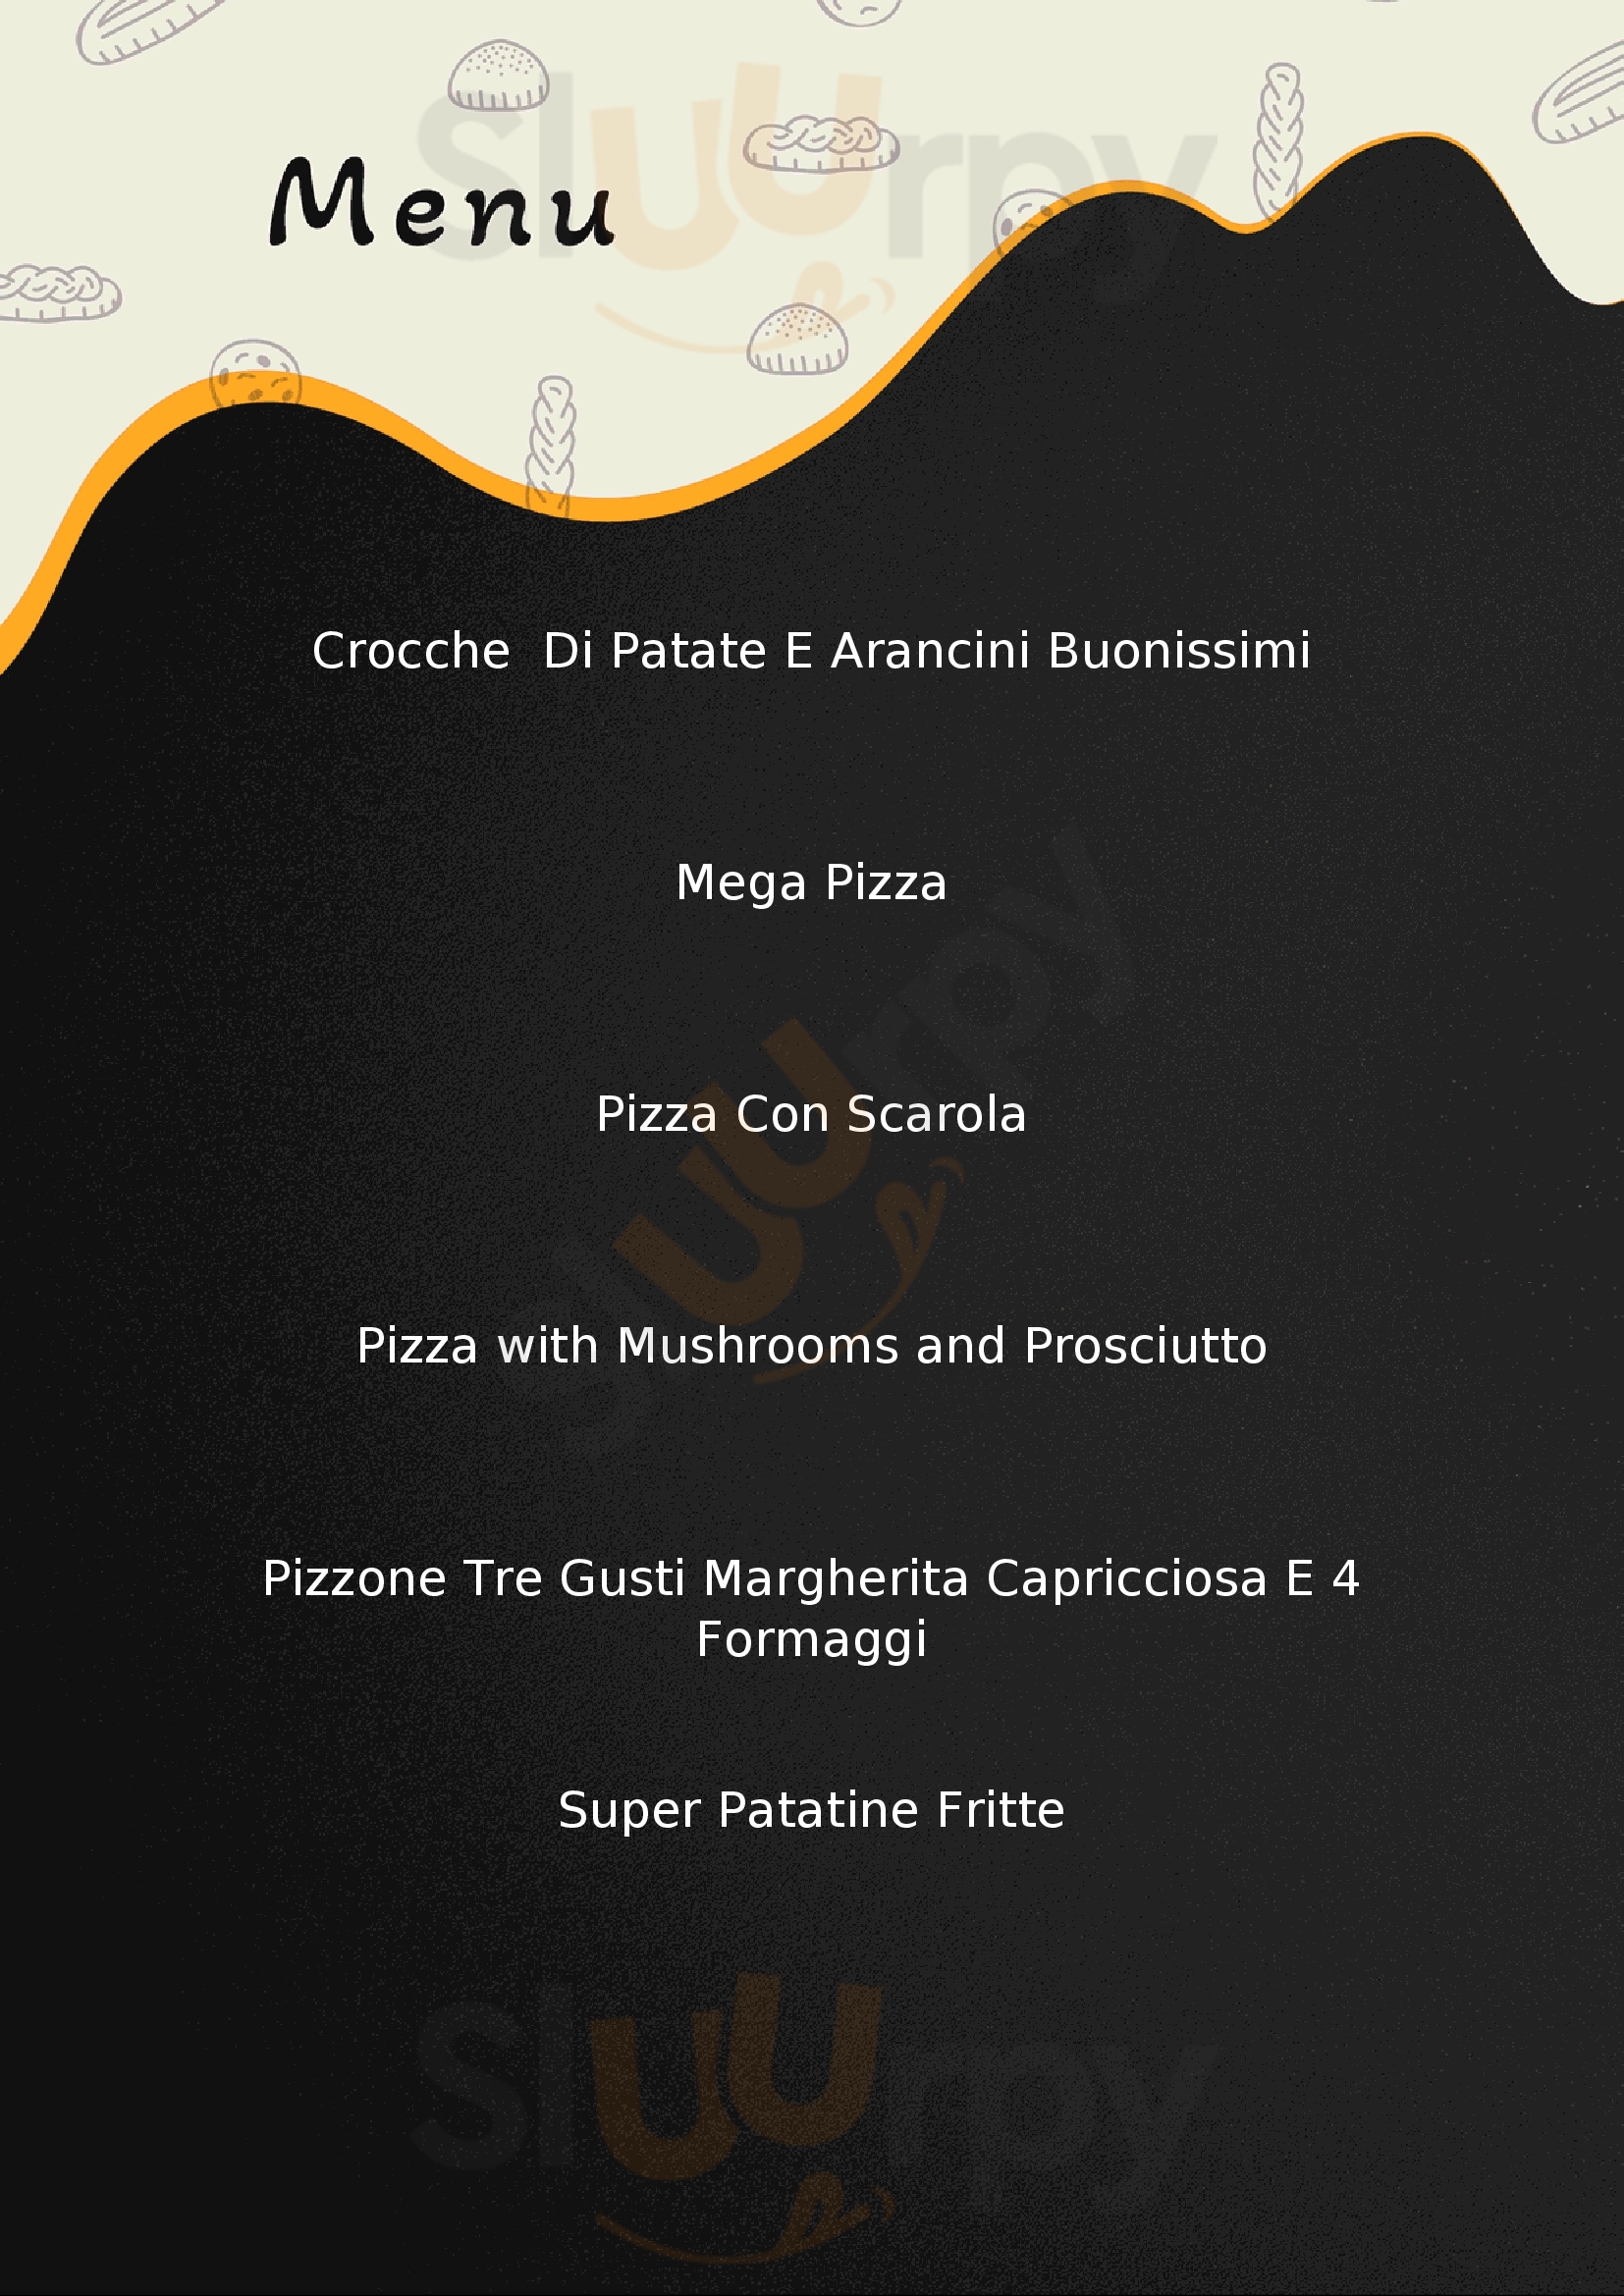 Danny's Pizzeria Sas Avellino menù 1 pagina